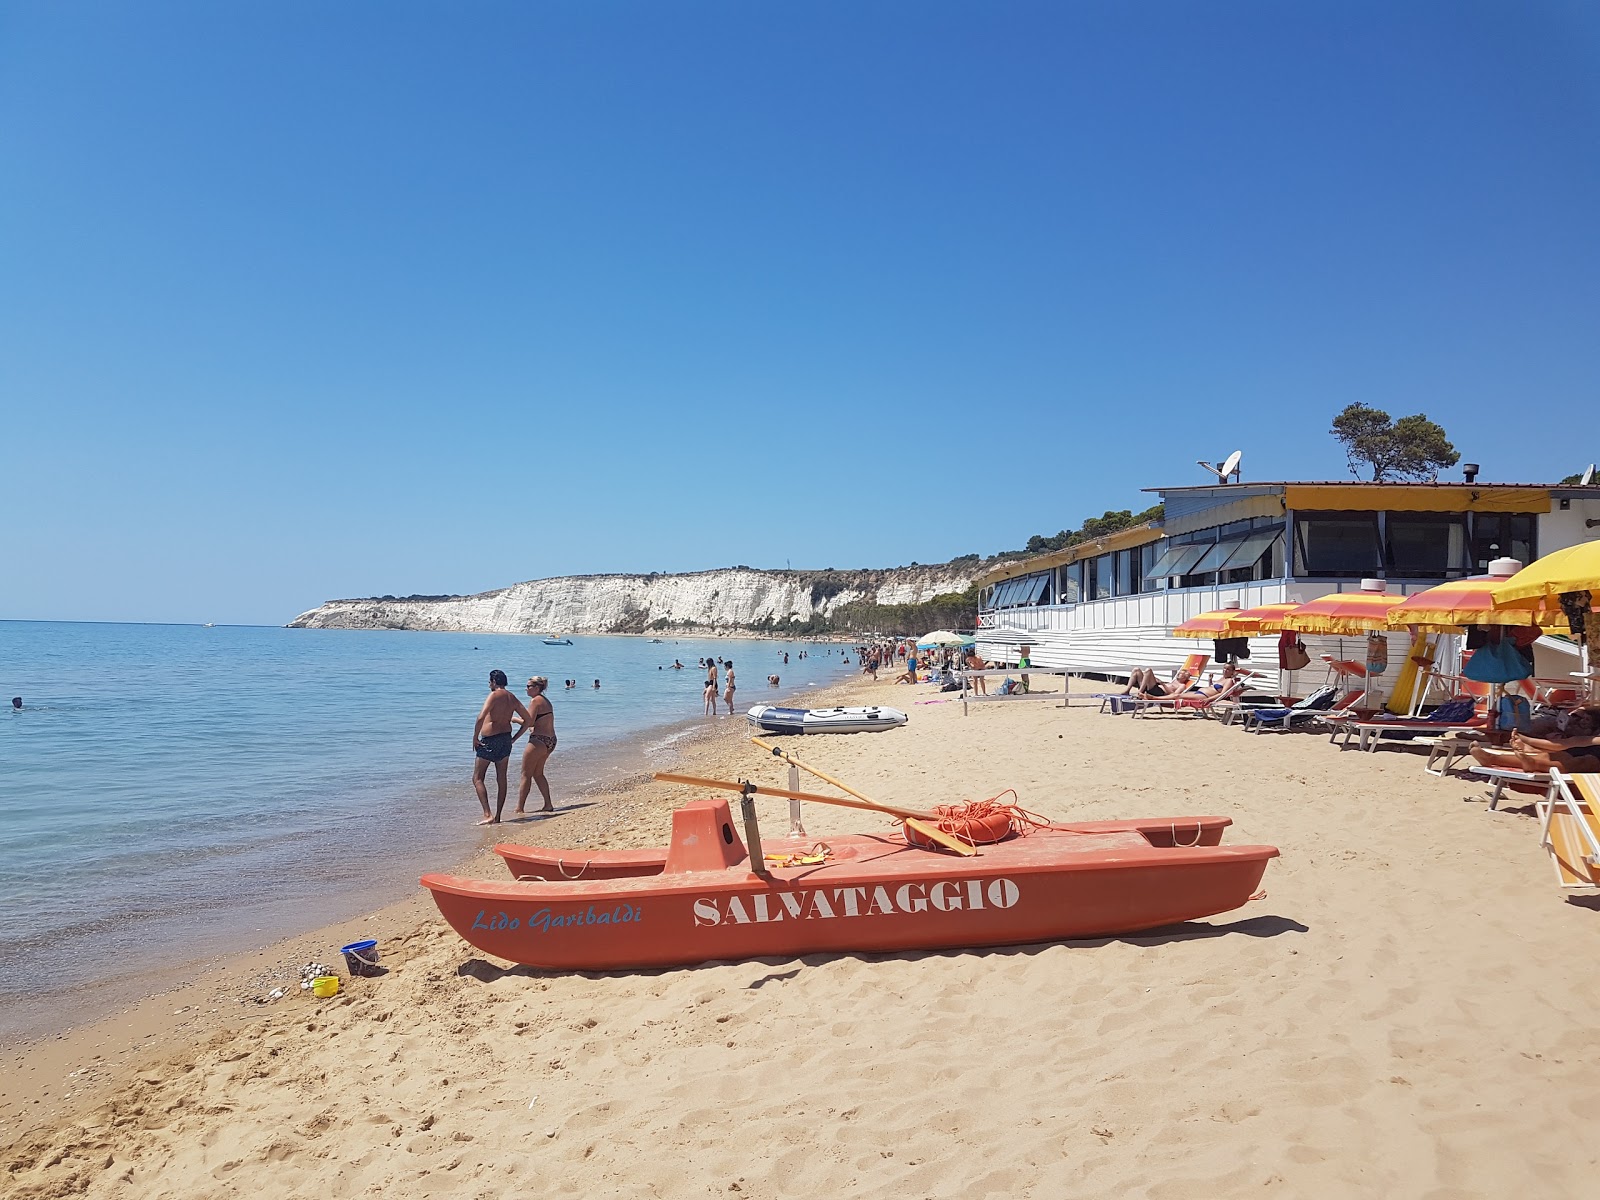 Foto de Spiaggia Di Eraclea Minoa localizado em área natural